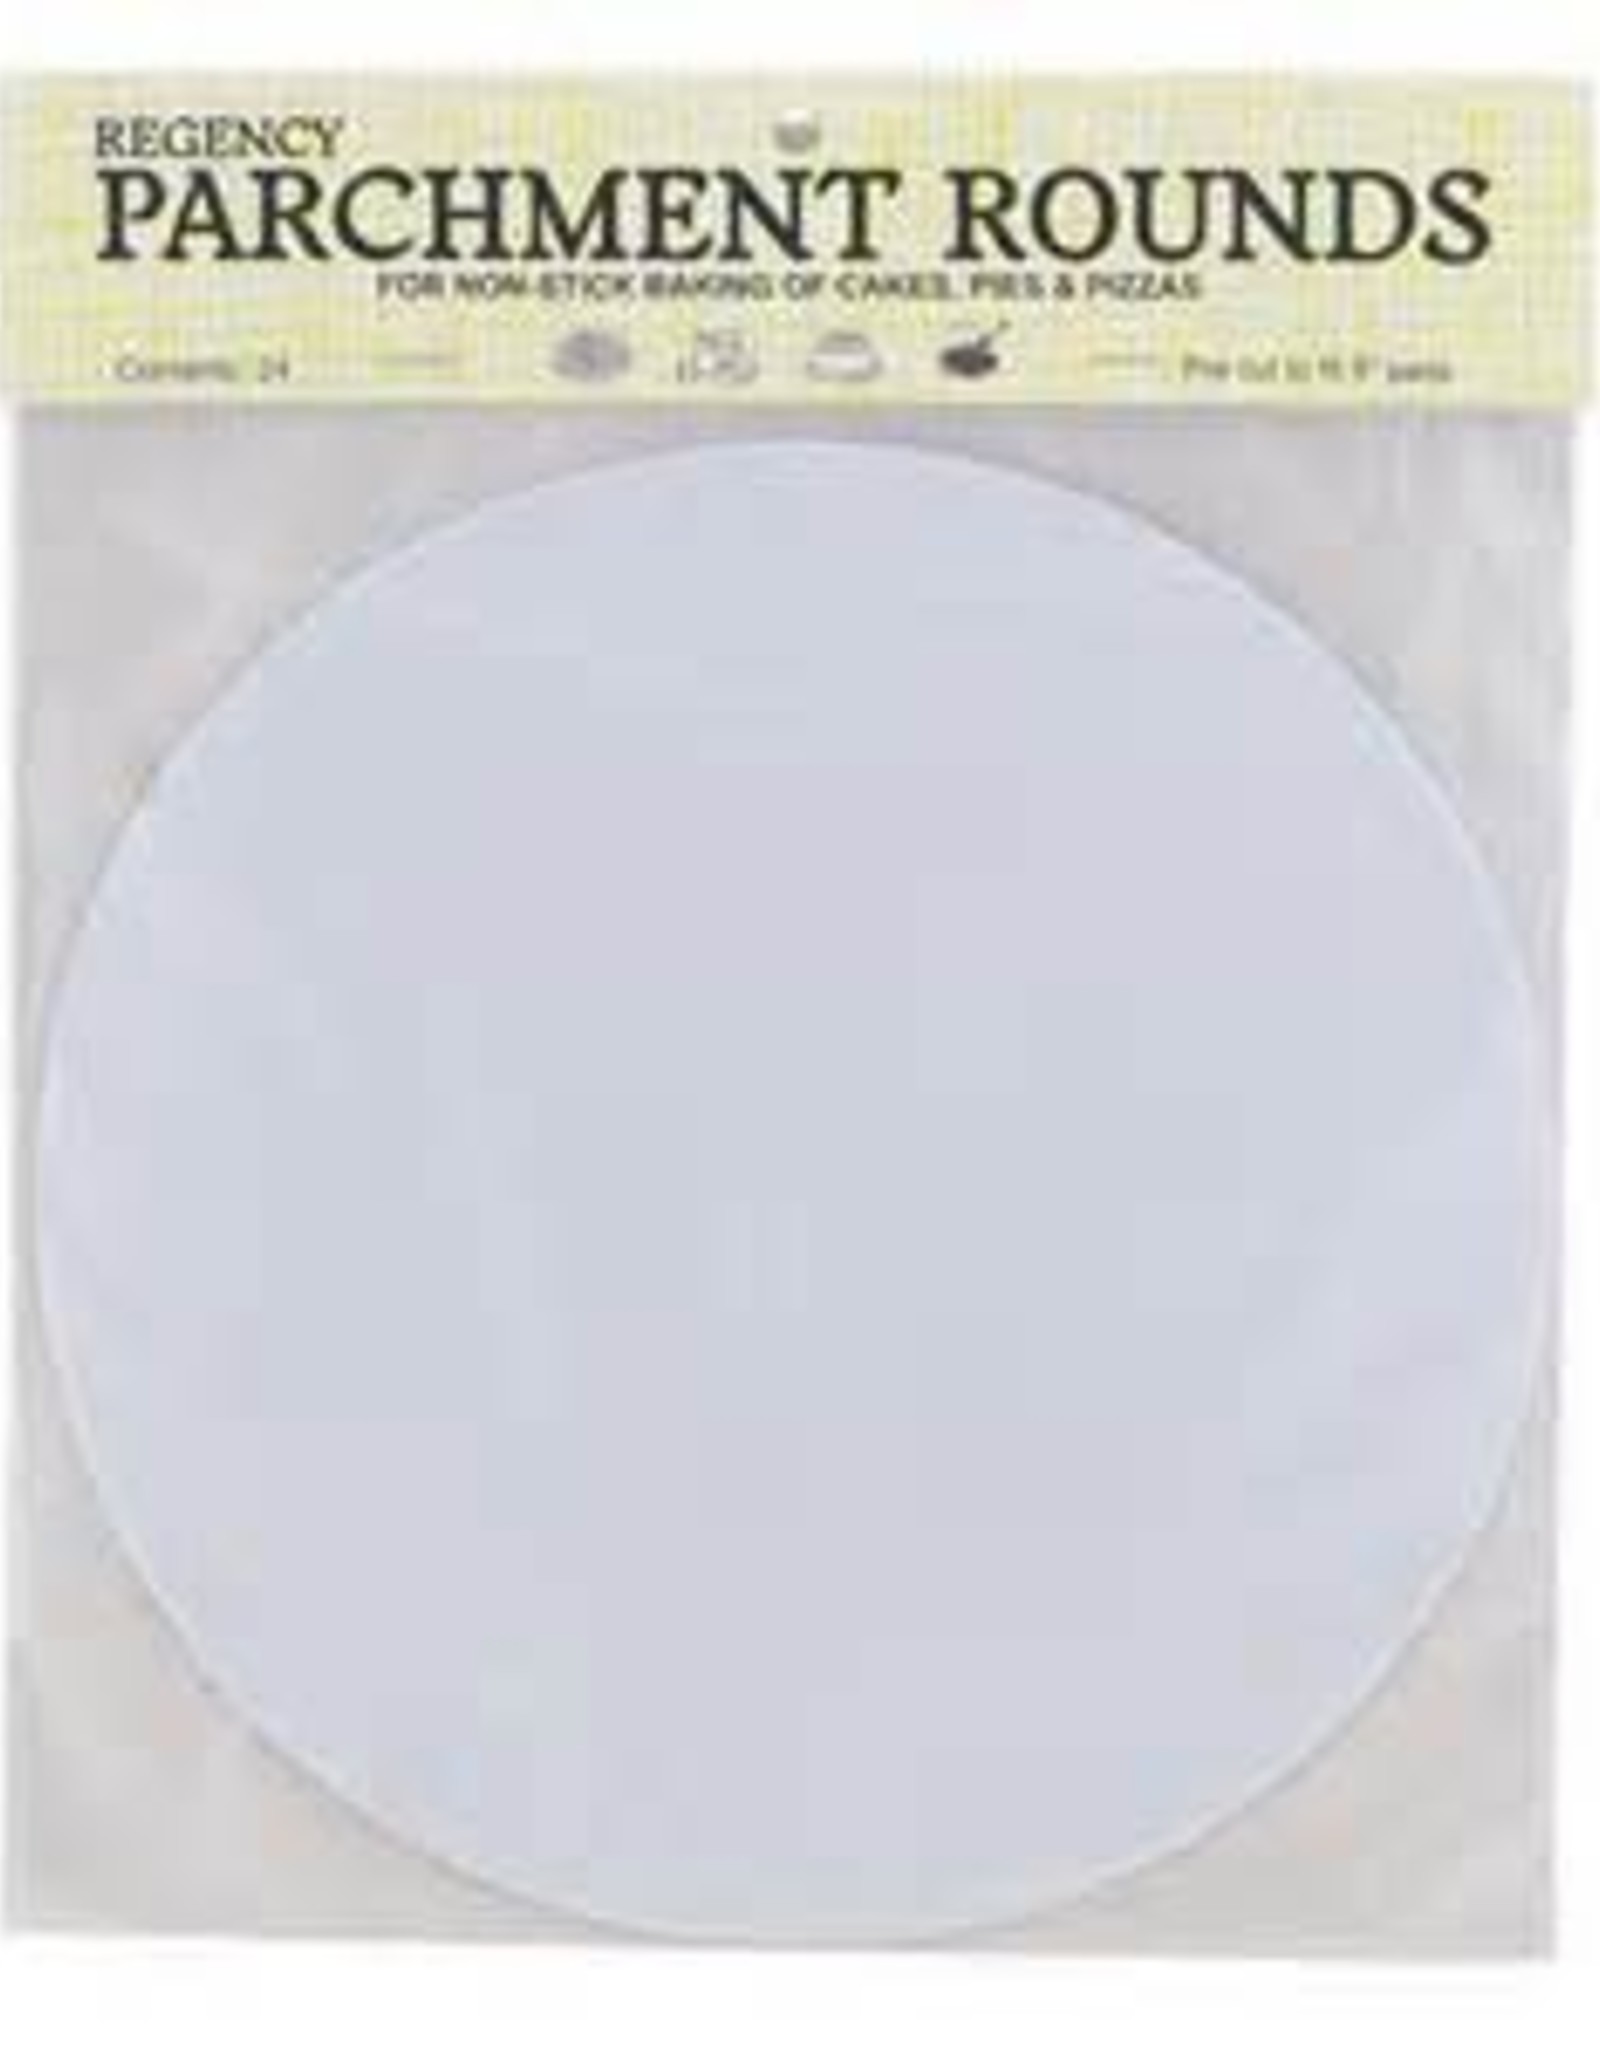 Parchment Rounds (12 inch)